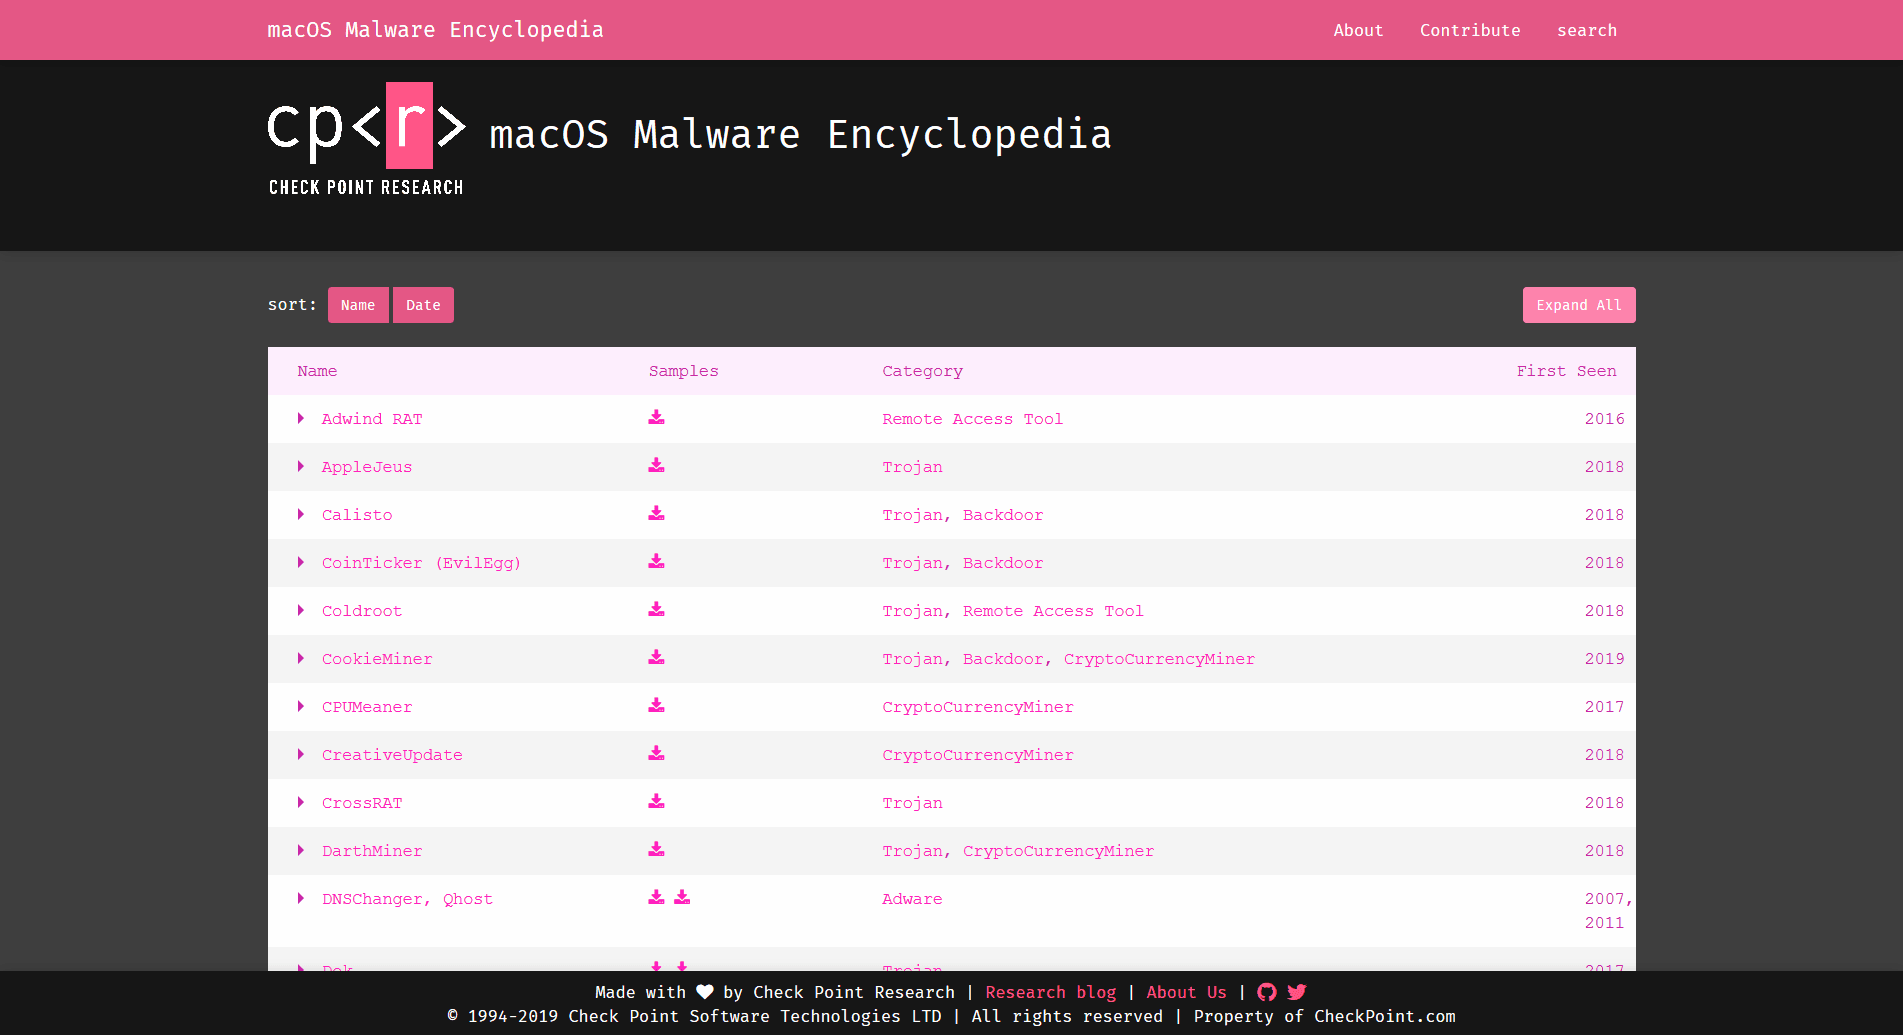 macOS malware encyklopedia